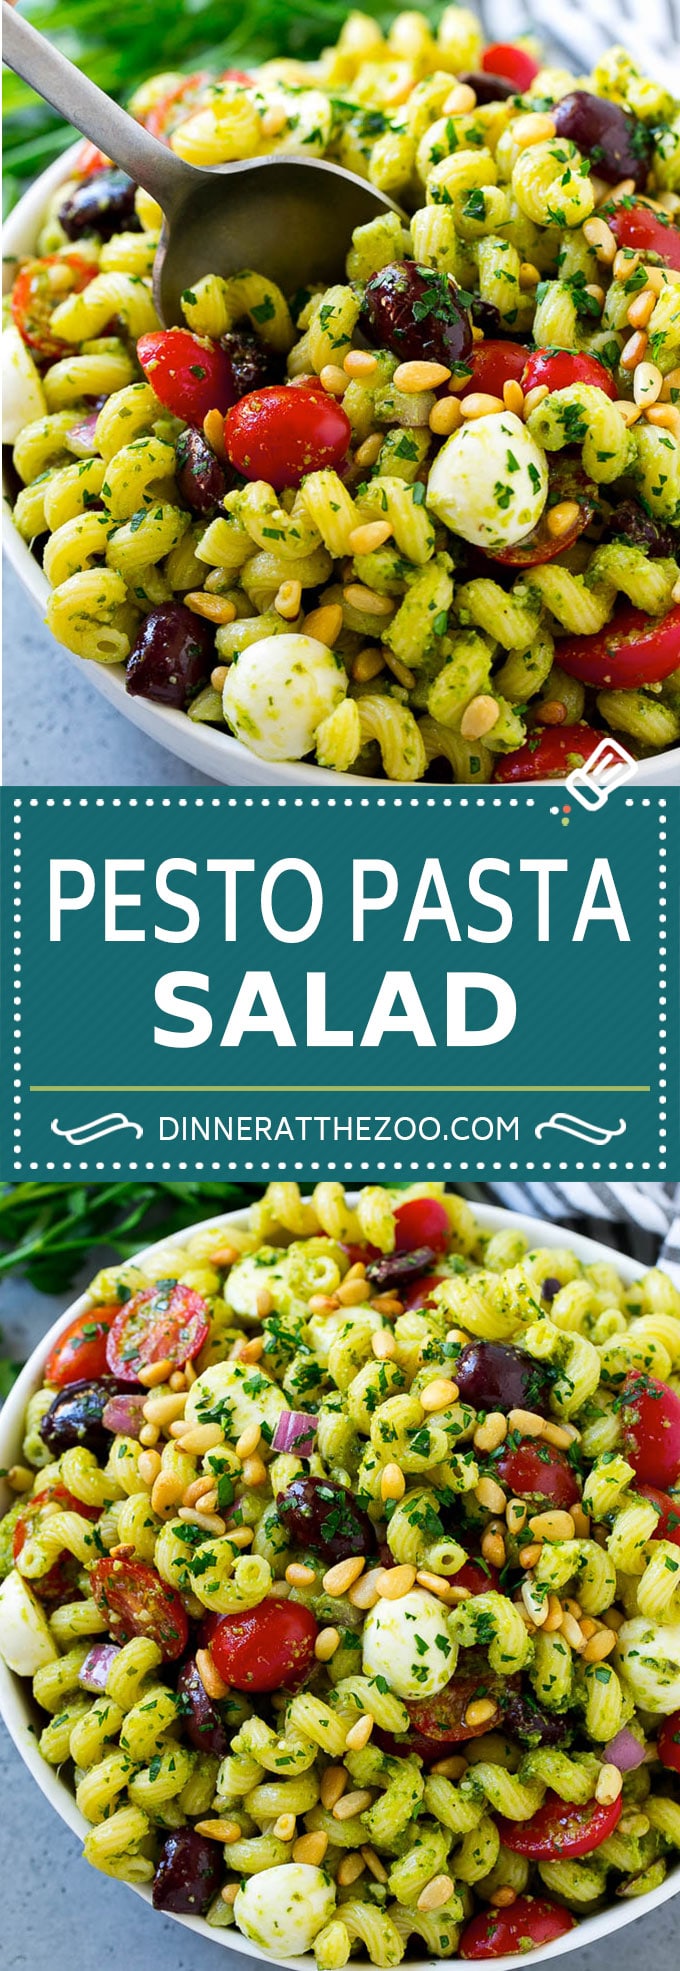 Pesto Pasta Salad | Italian Pasta Salad | Easy Pasta Salad #pasta #salad #pesto #olives #tomatoes #dinneratthezoo